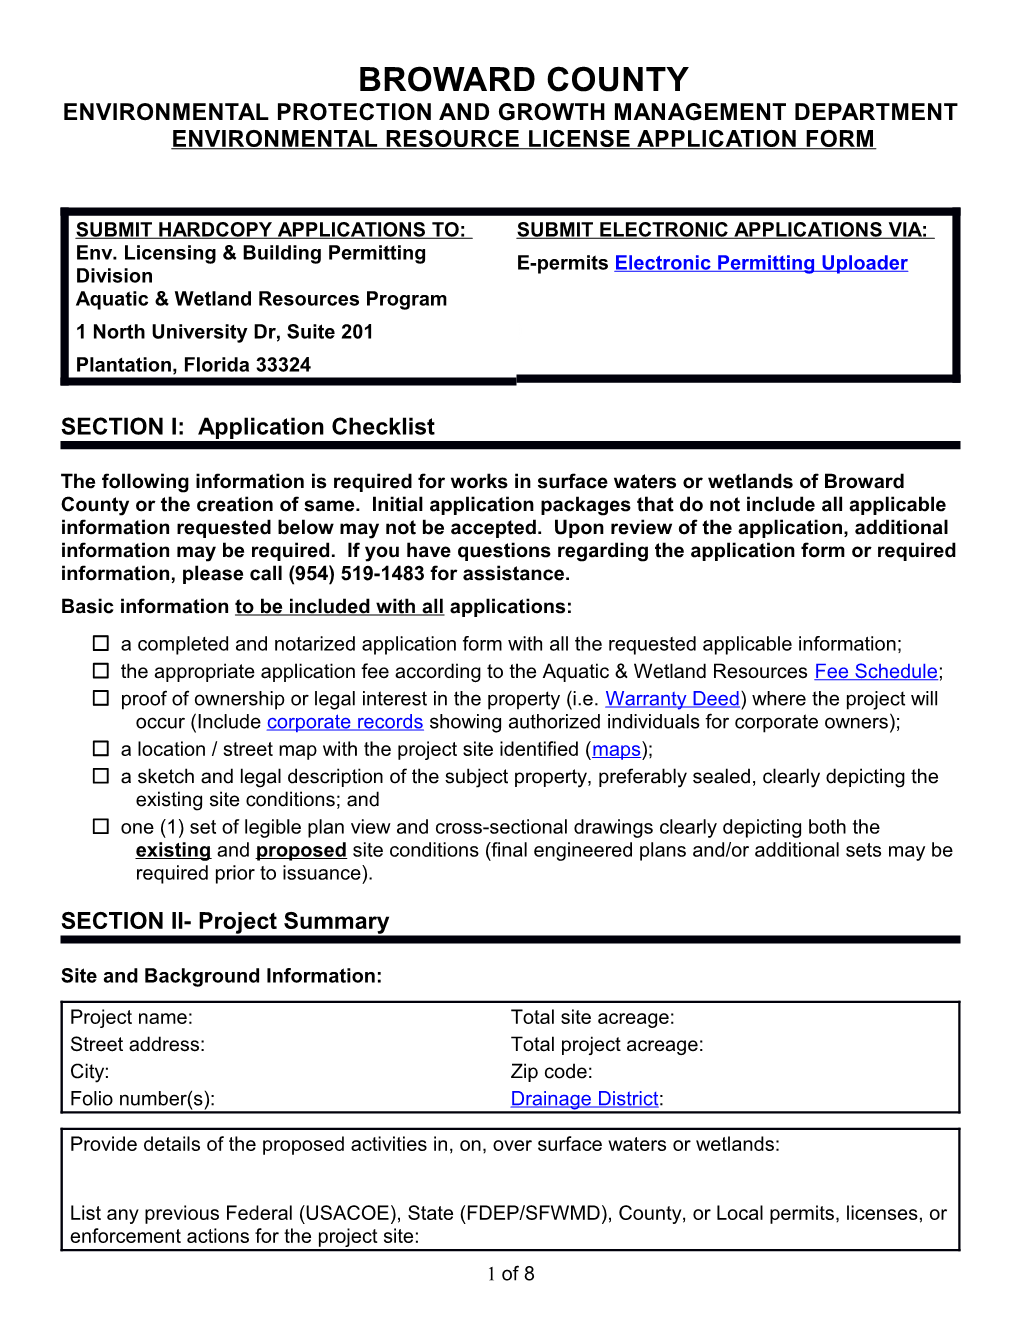 Broward County Environmental Resource License Application